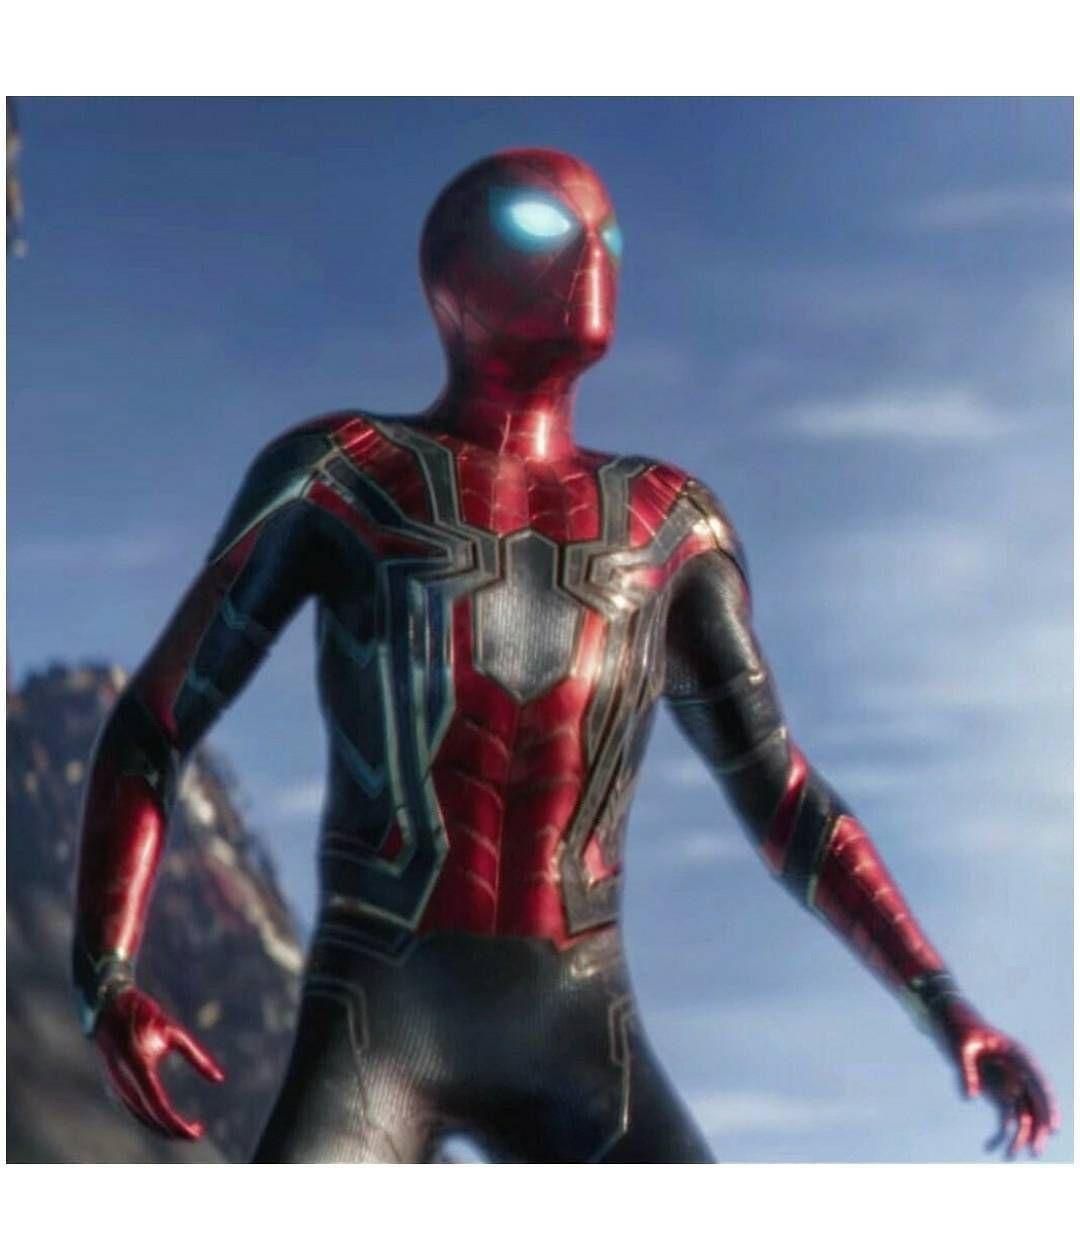 Spider-Man In Avengers Infinity War 2018 Wallpapers